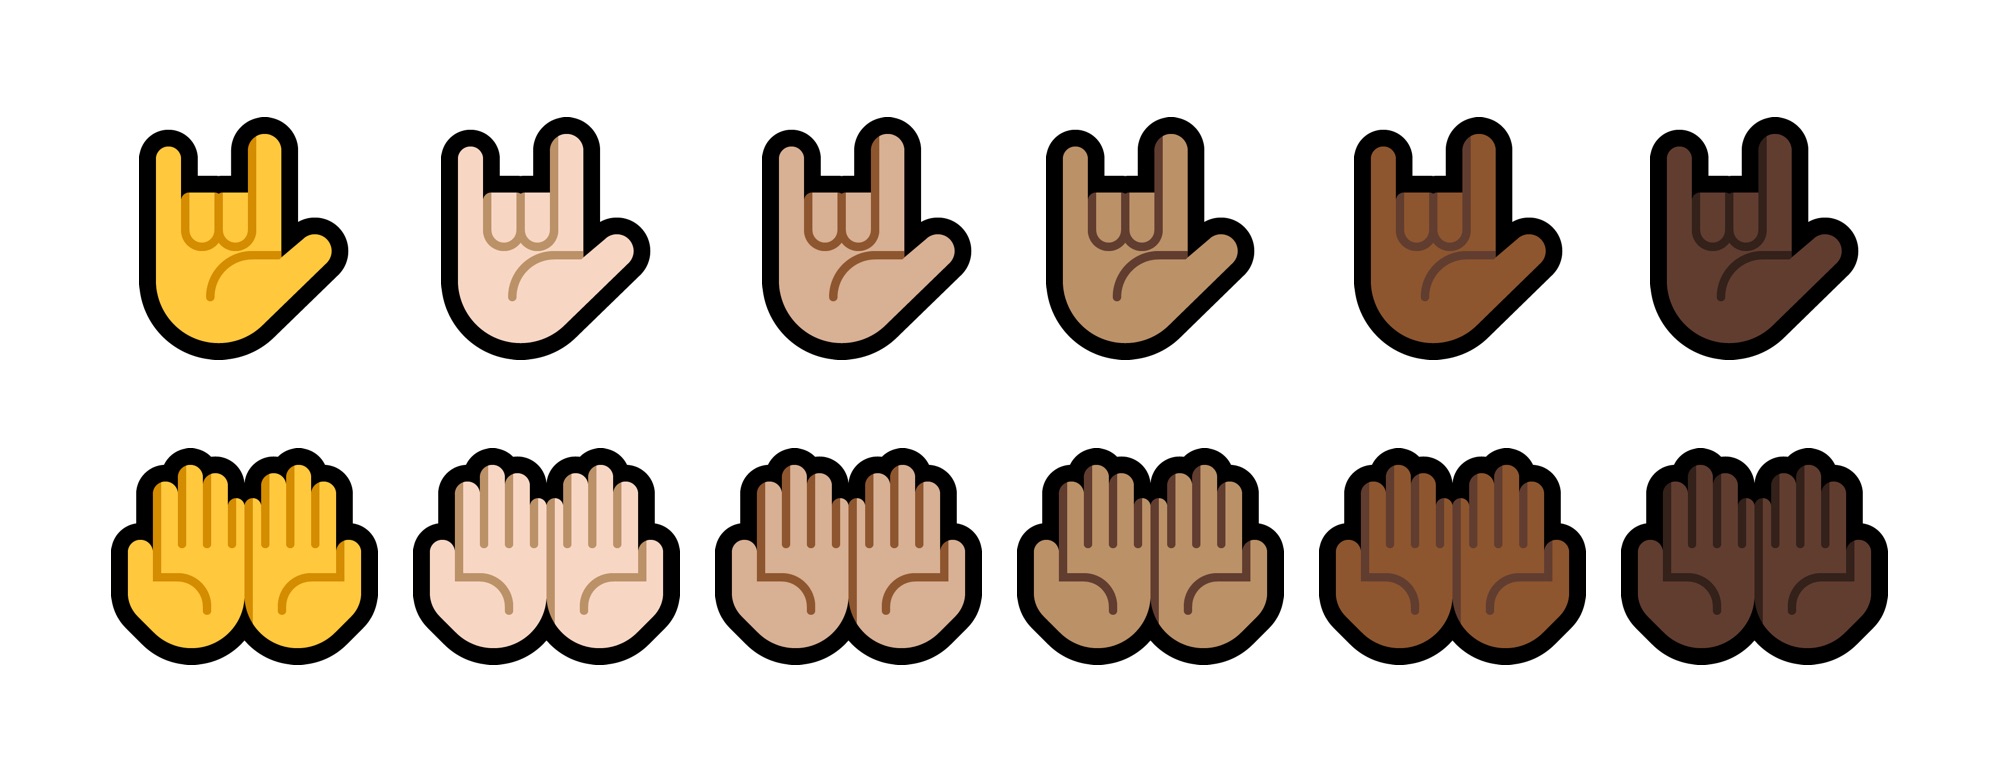 win-10-fcu-new-emoji-gestures-emojipedia-ilu-palms-up